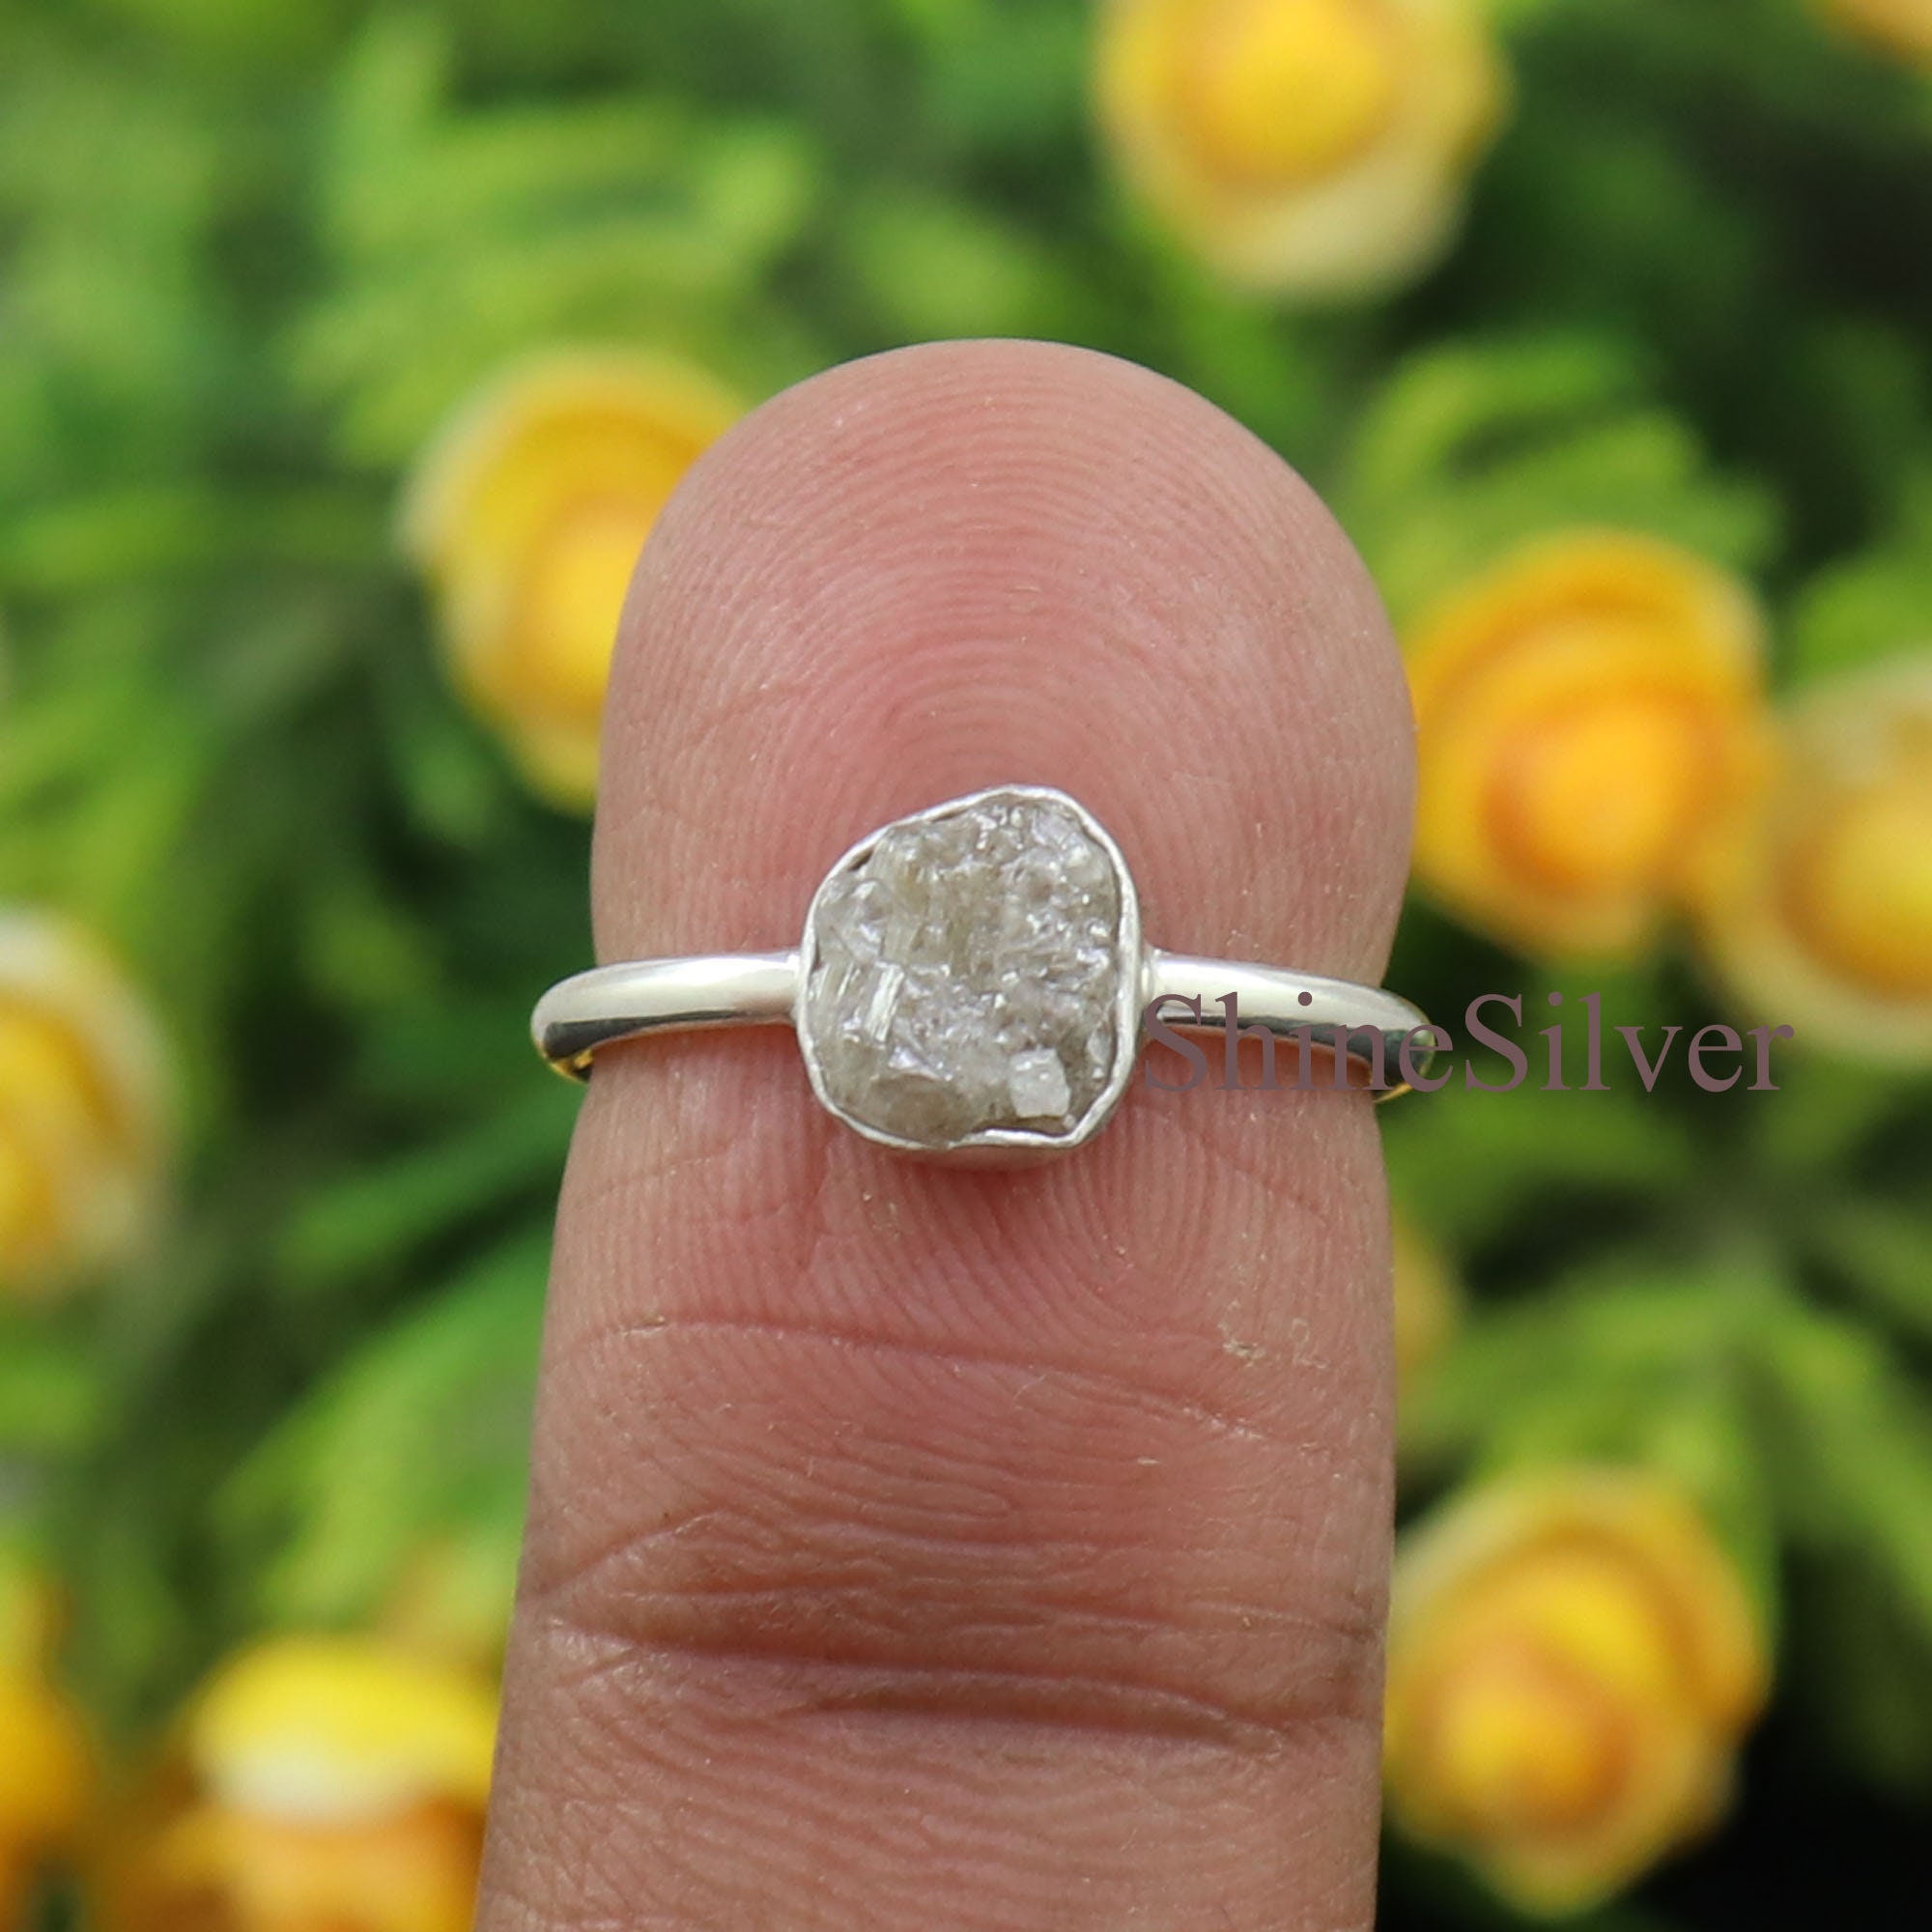 Exquisite Light Yellow Diamond Ring - 8.49 ct.